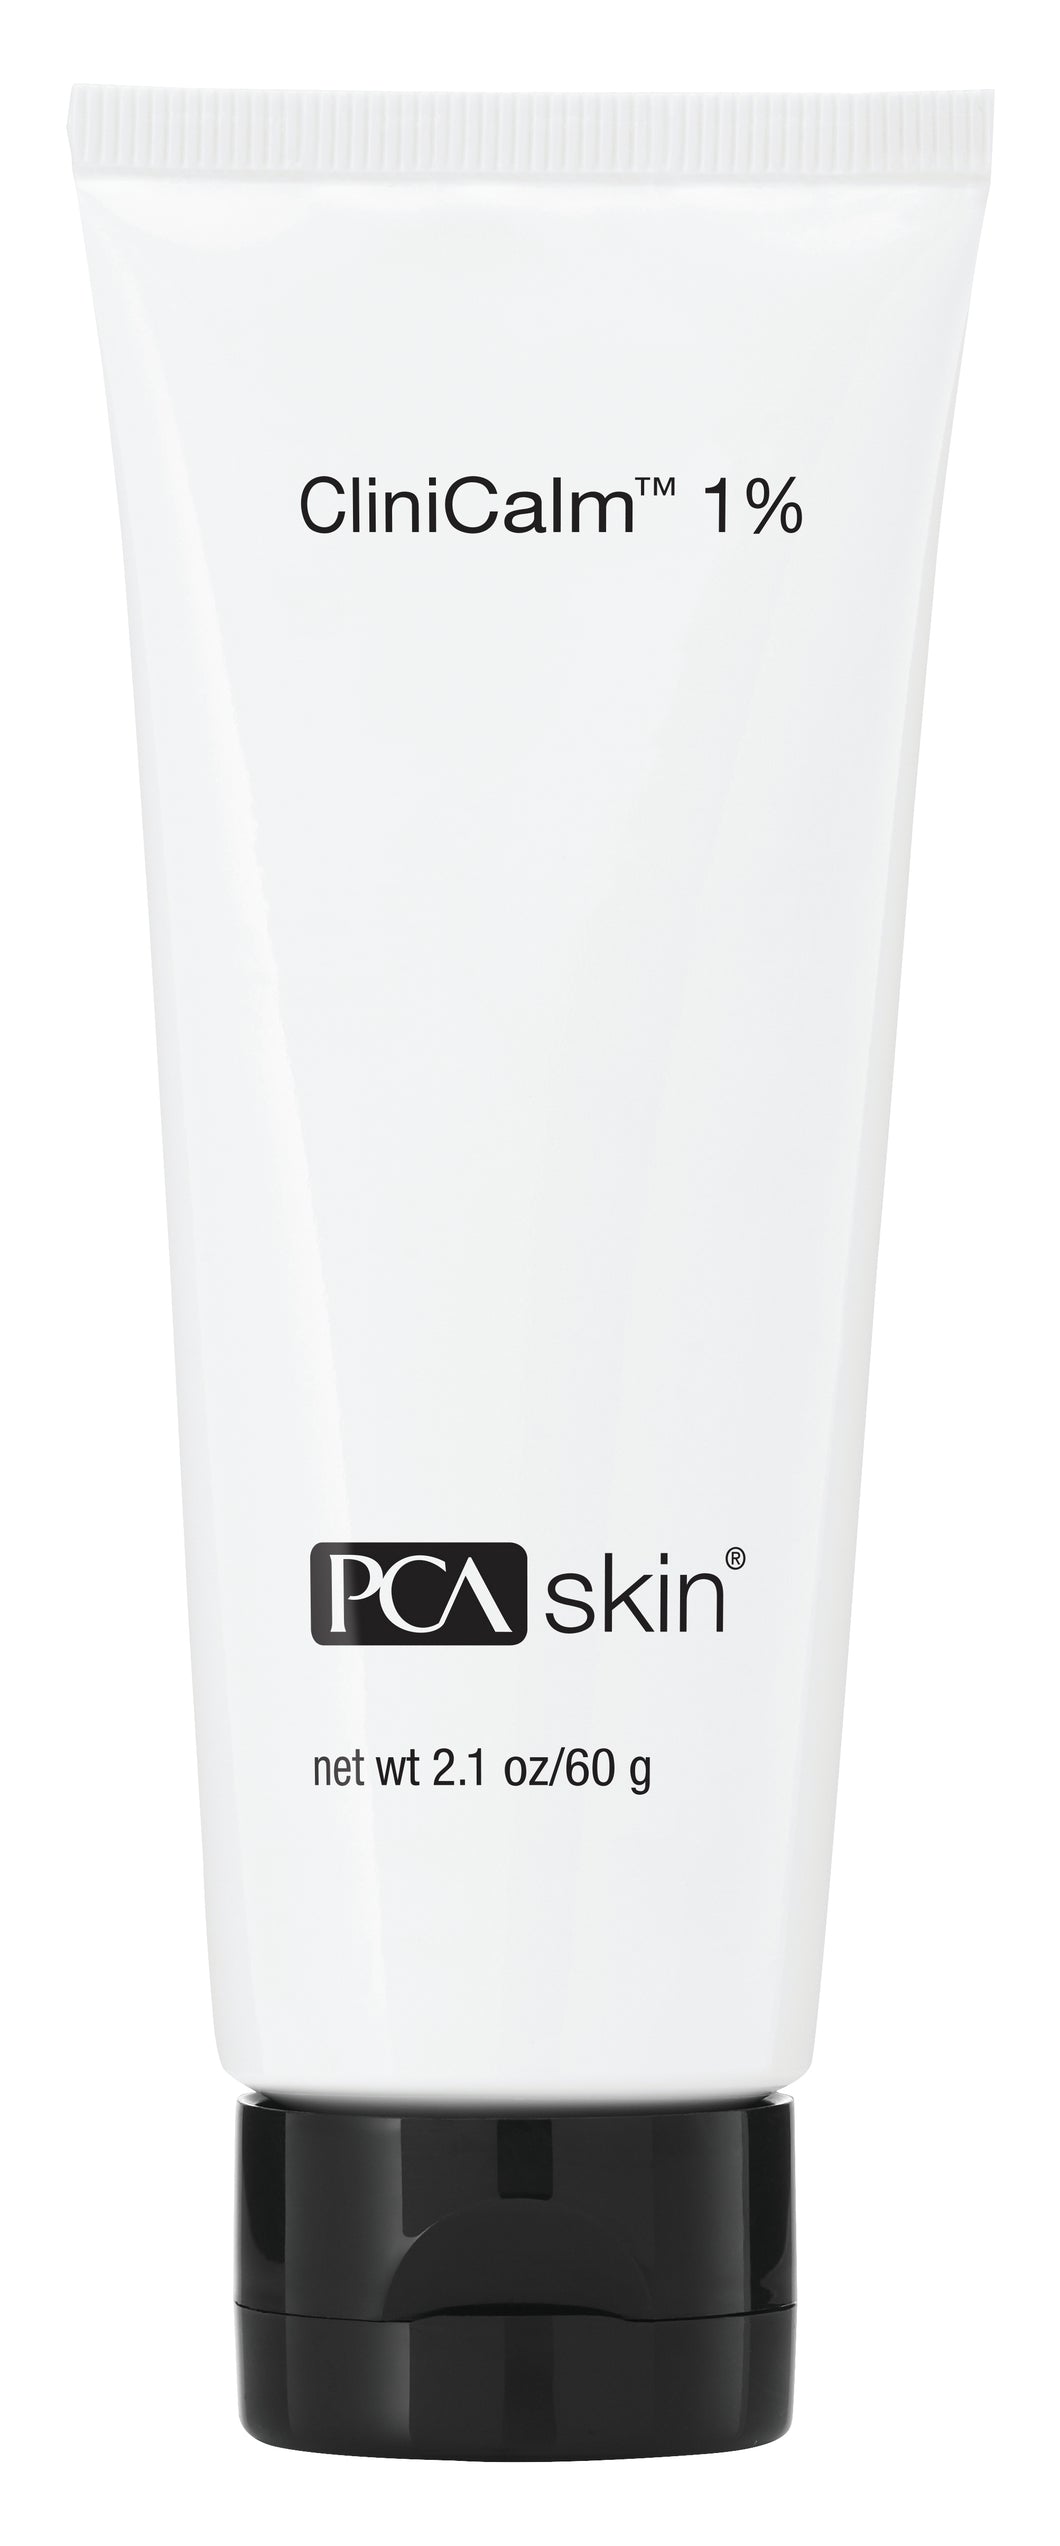 PCA Skin CliniCalm™ 1% 2.1 oz net wt